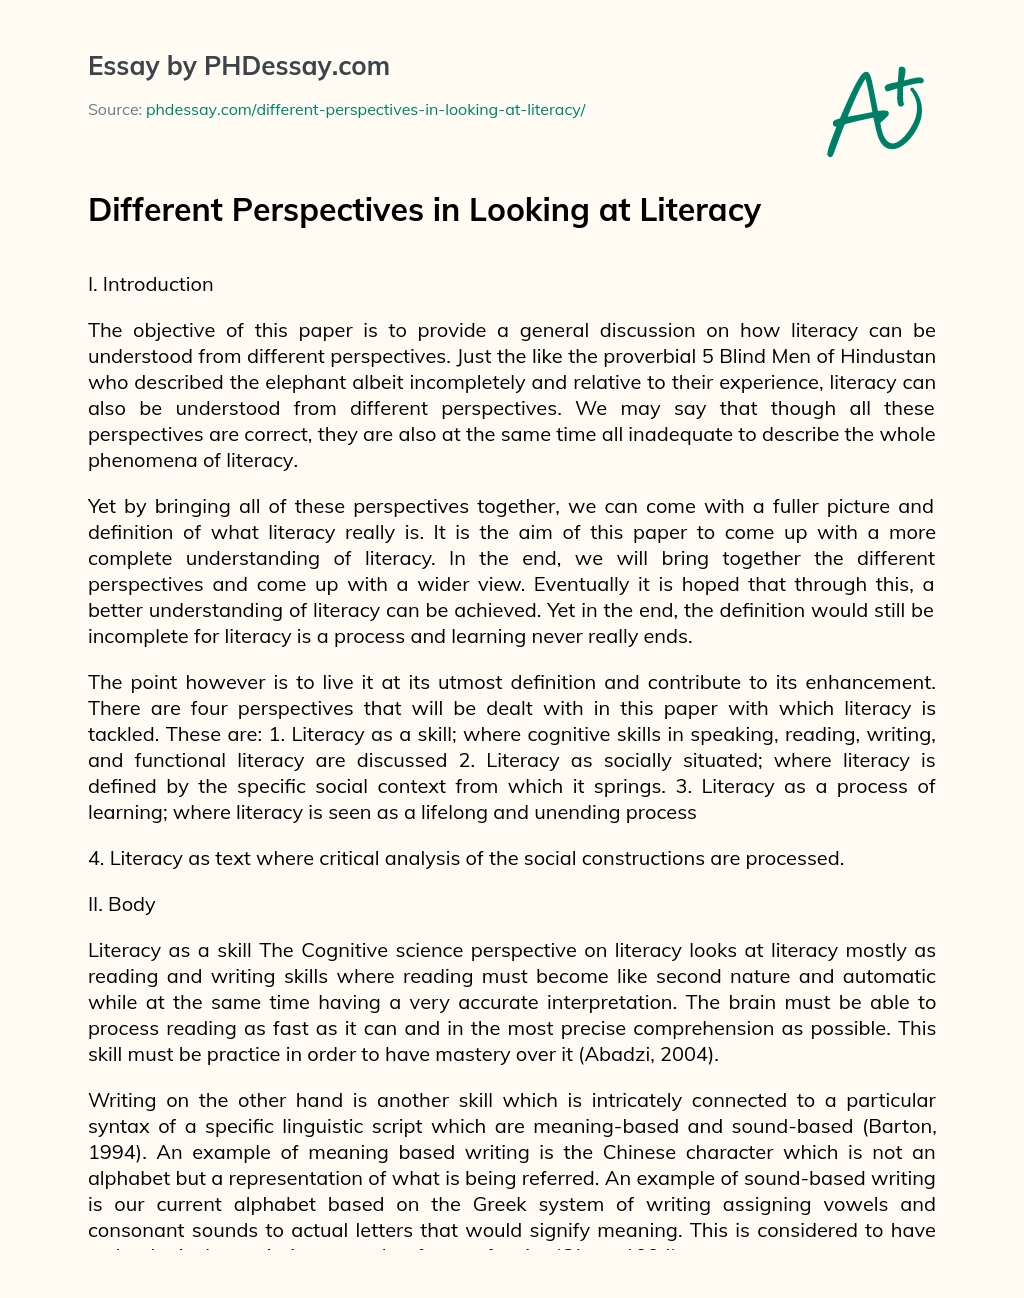 literacy and illiteracy essay